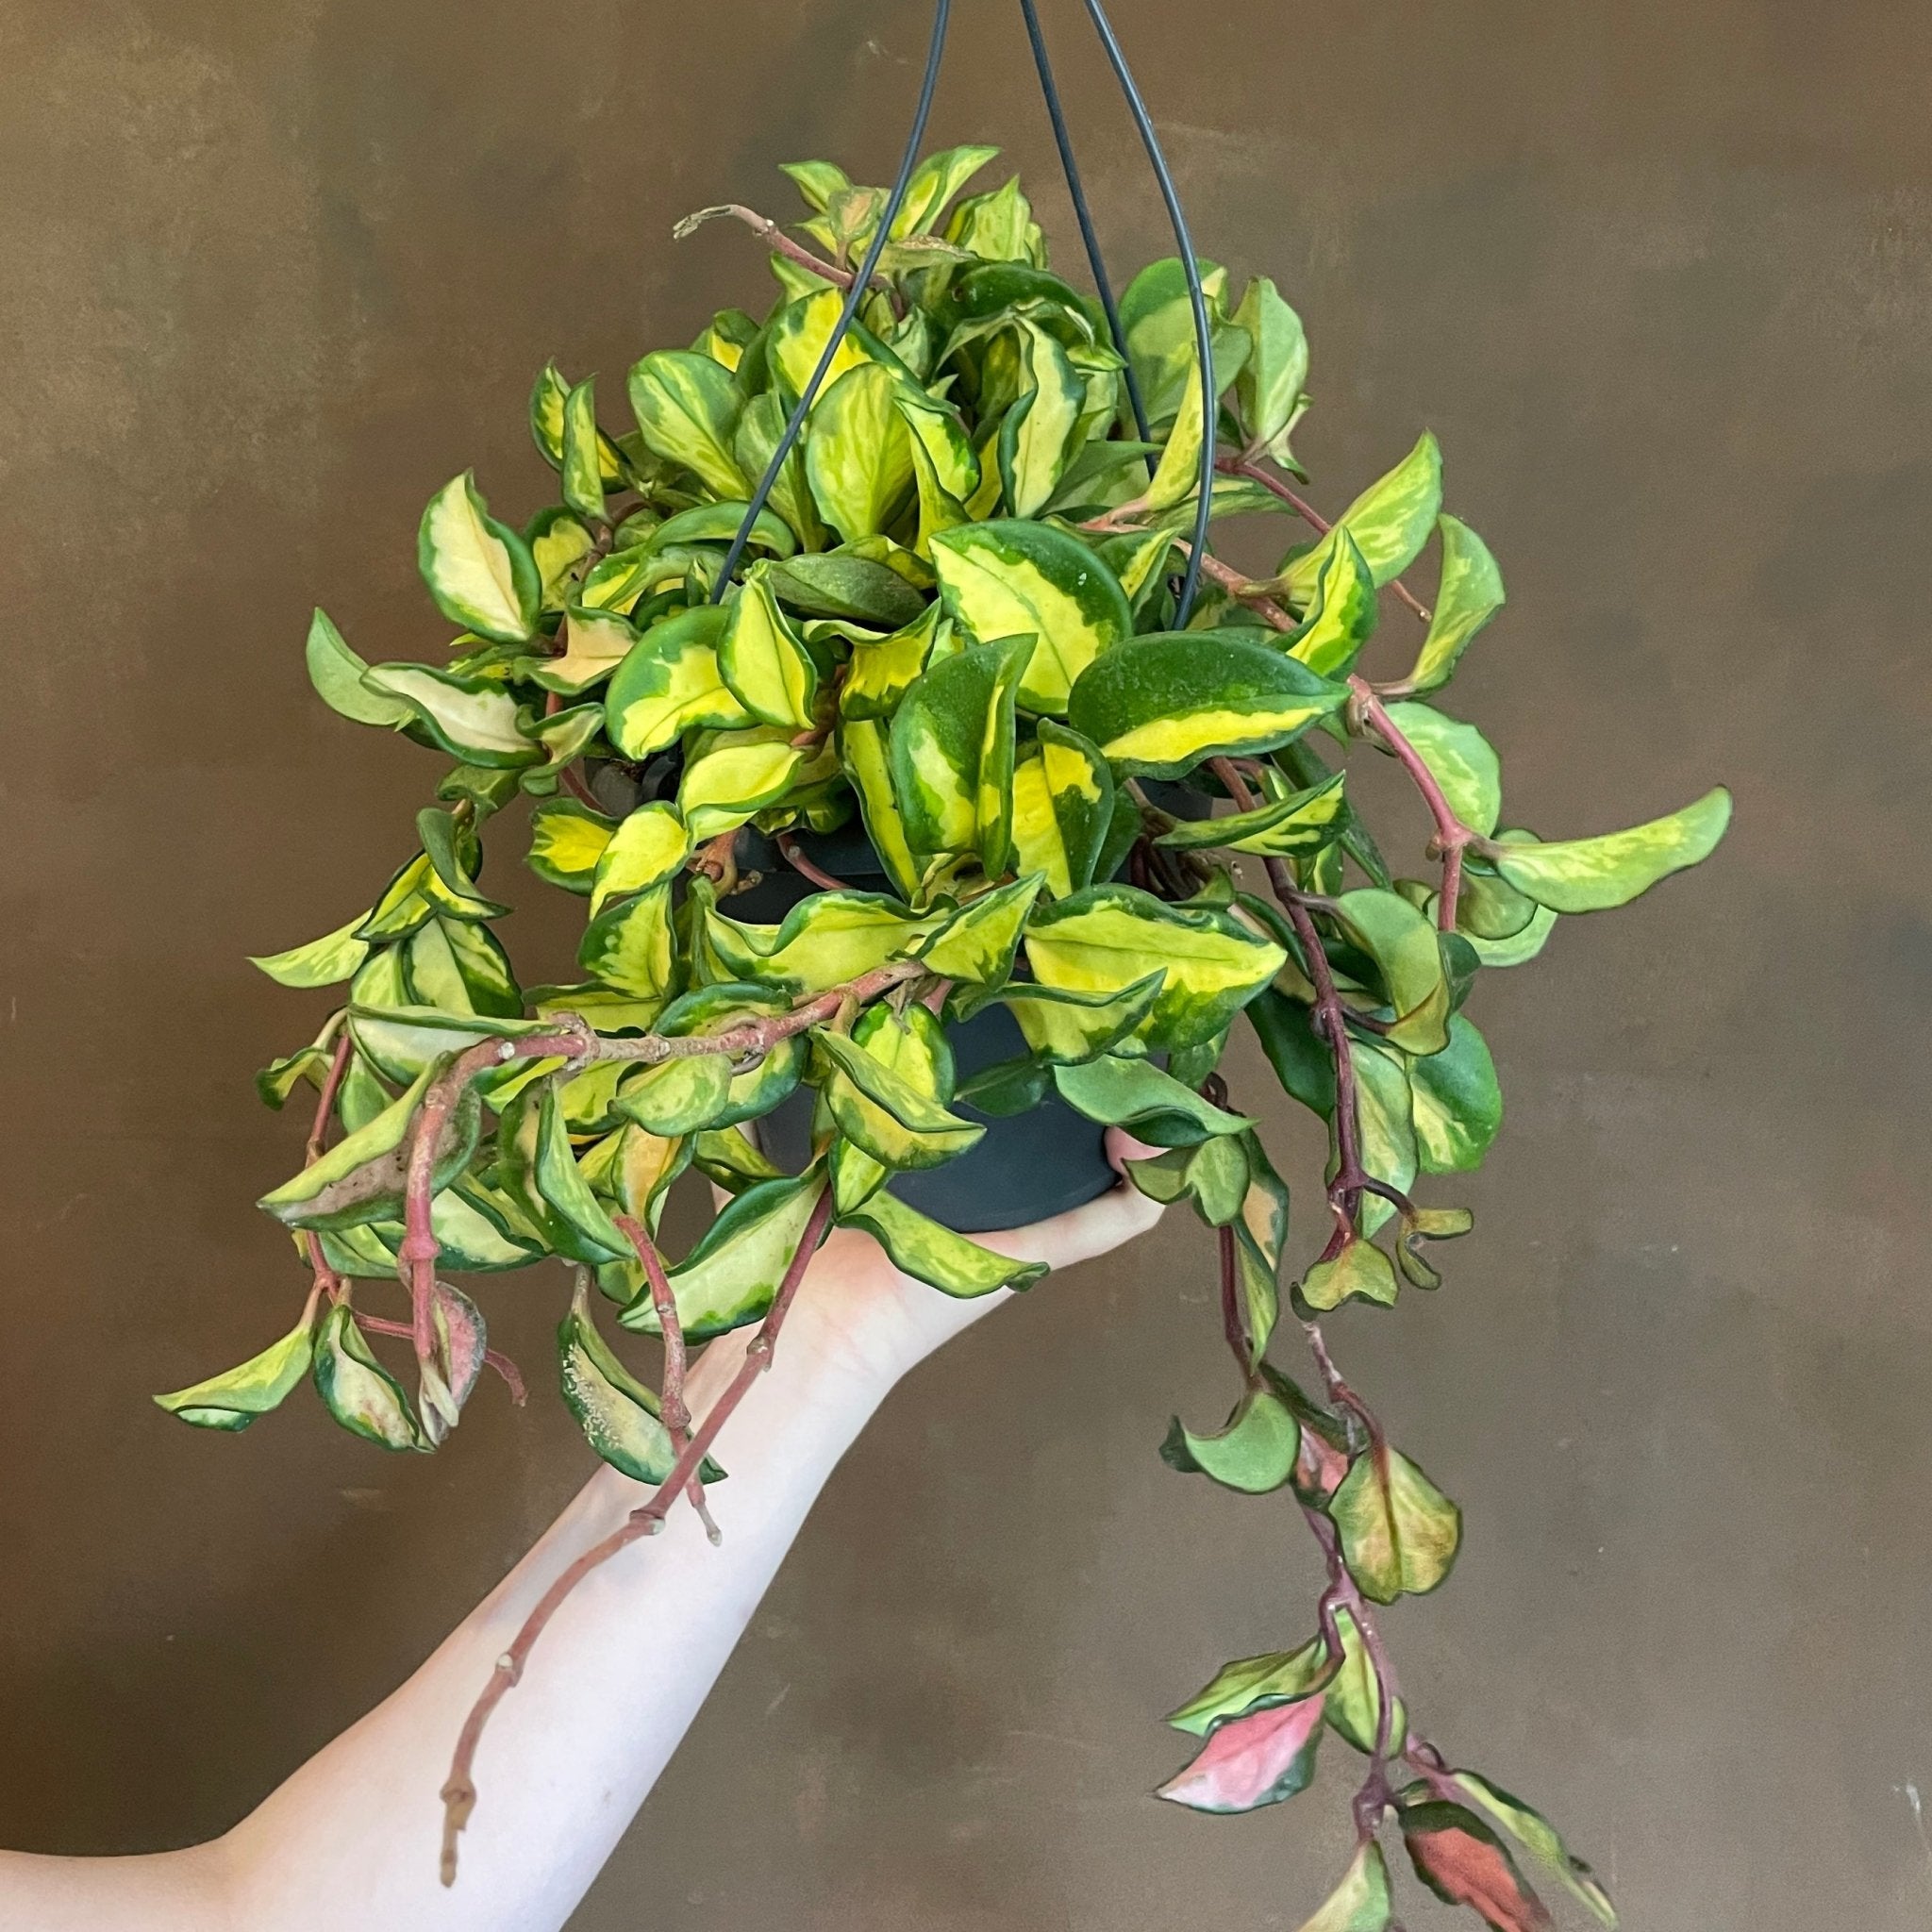 Hoya carnosa ‘Tricolor’ (19cm hangpot) - grow urban. UK